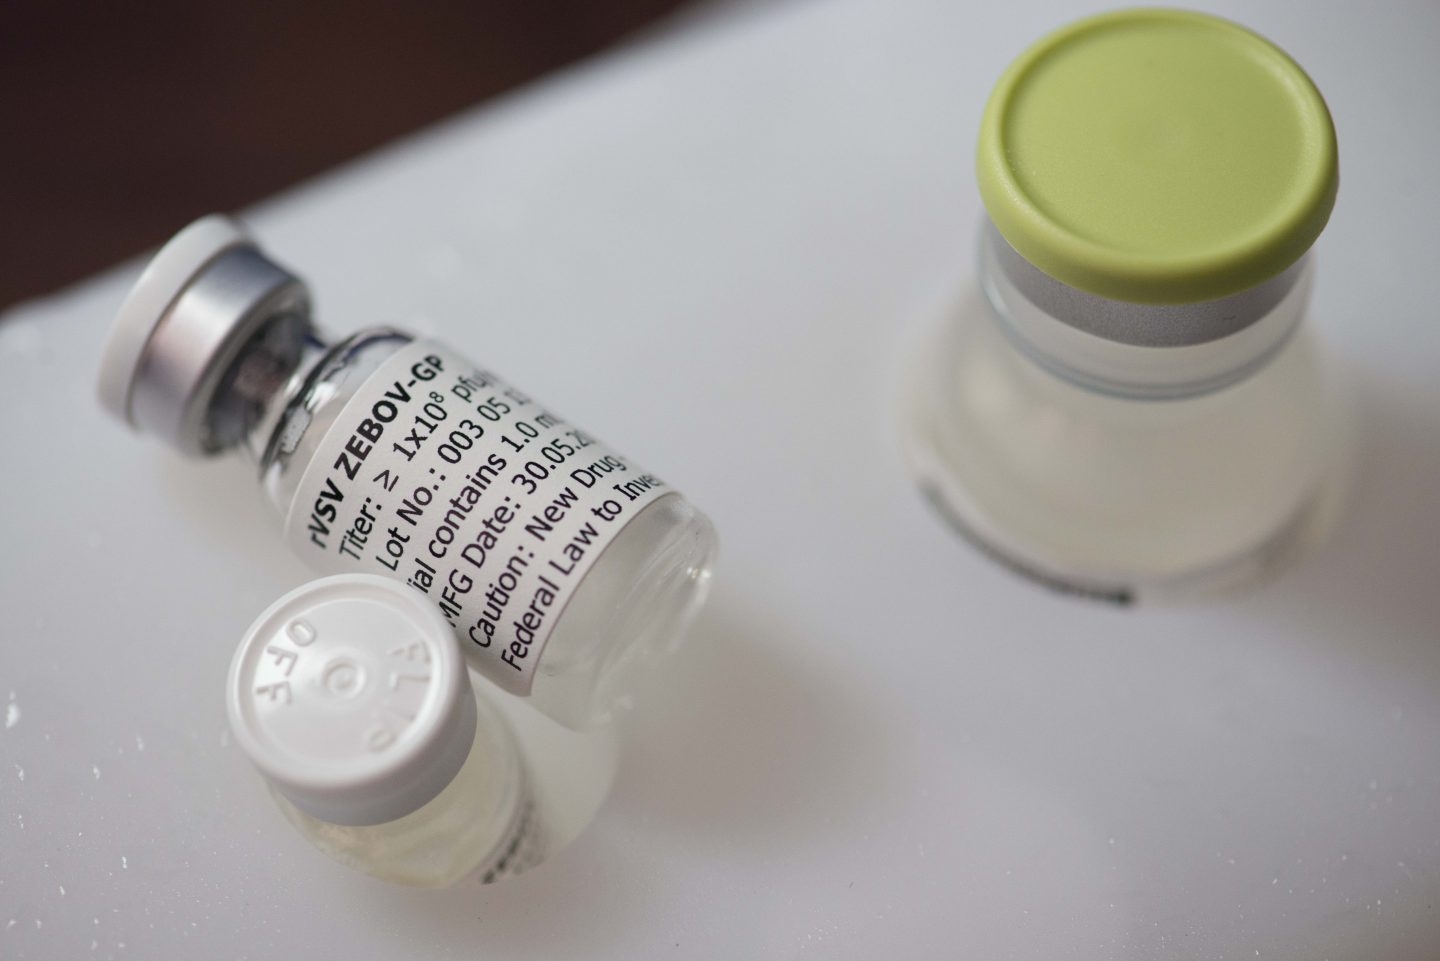 La OMS confirmó la alta eficacia de la vacuna en diciembre de 2016.